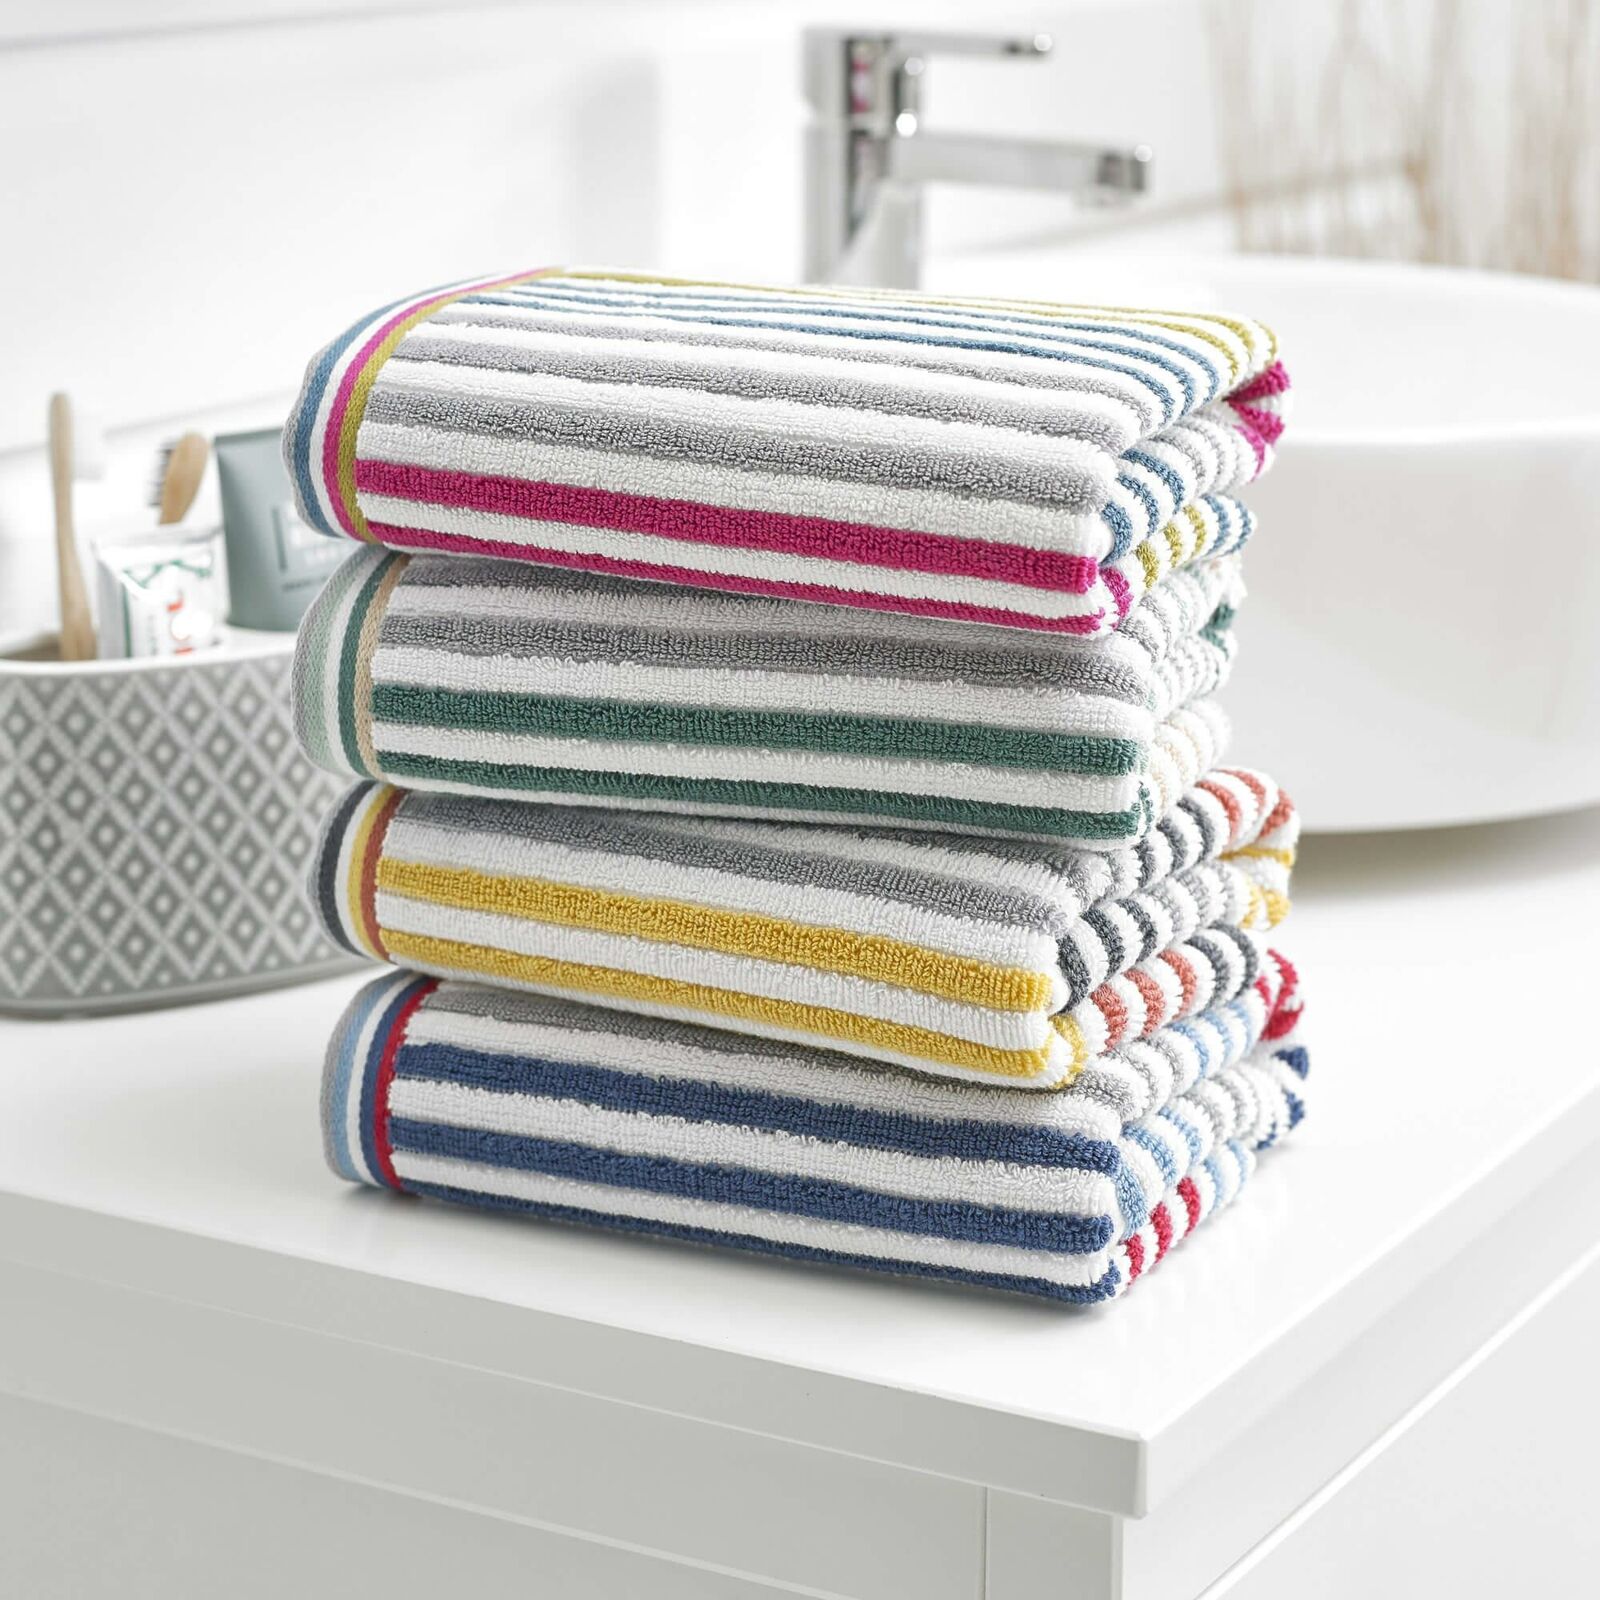 Hanover Striped Cotton Towel - Magenta